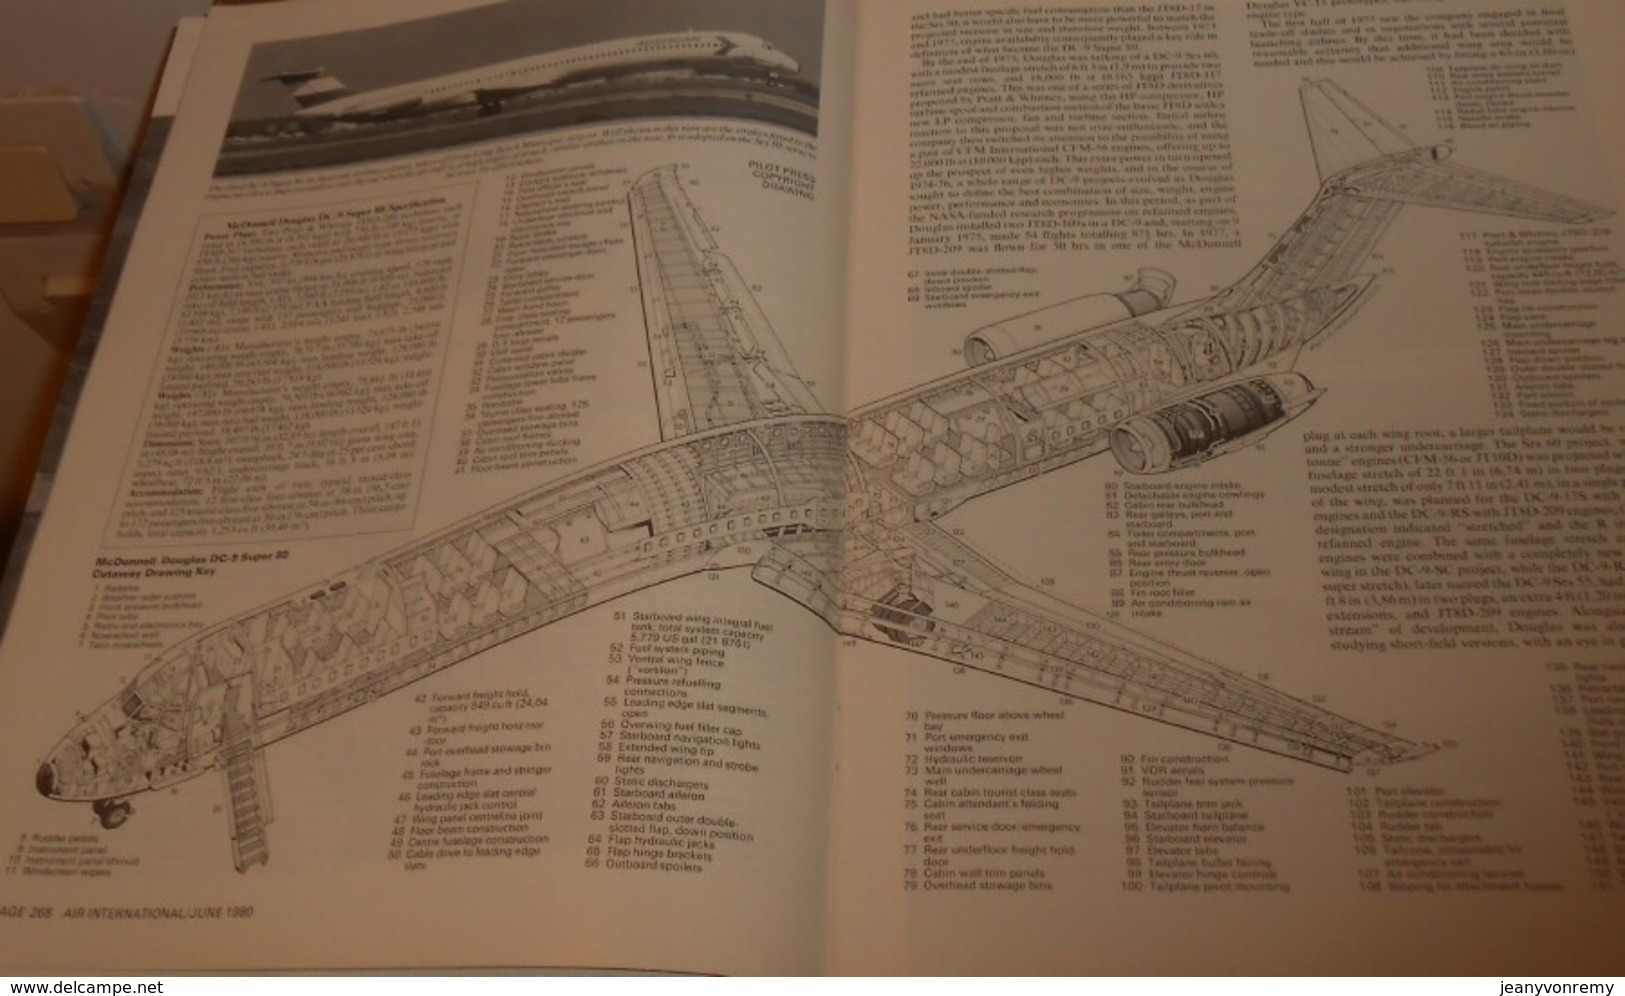 Air International. Volume 18. N°6. Juin 1980. - Transportation